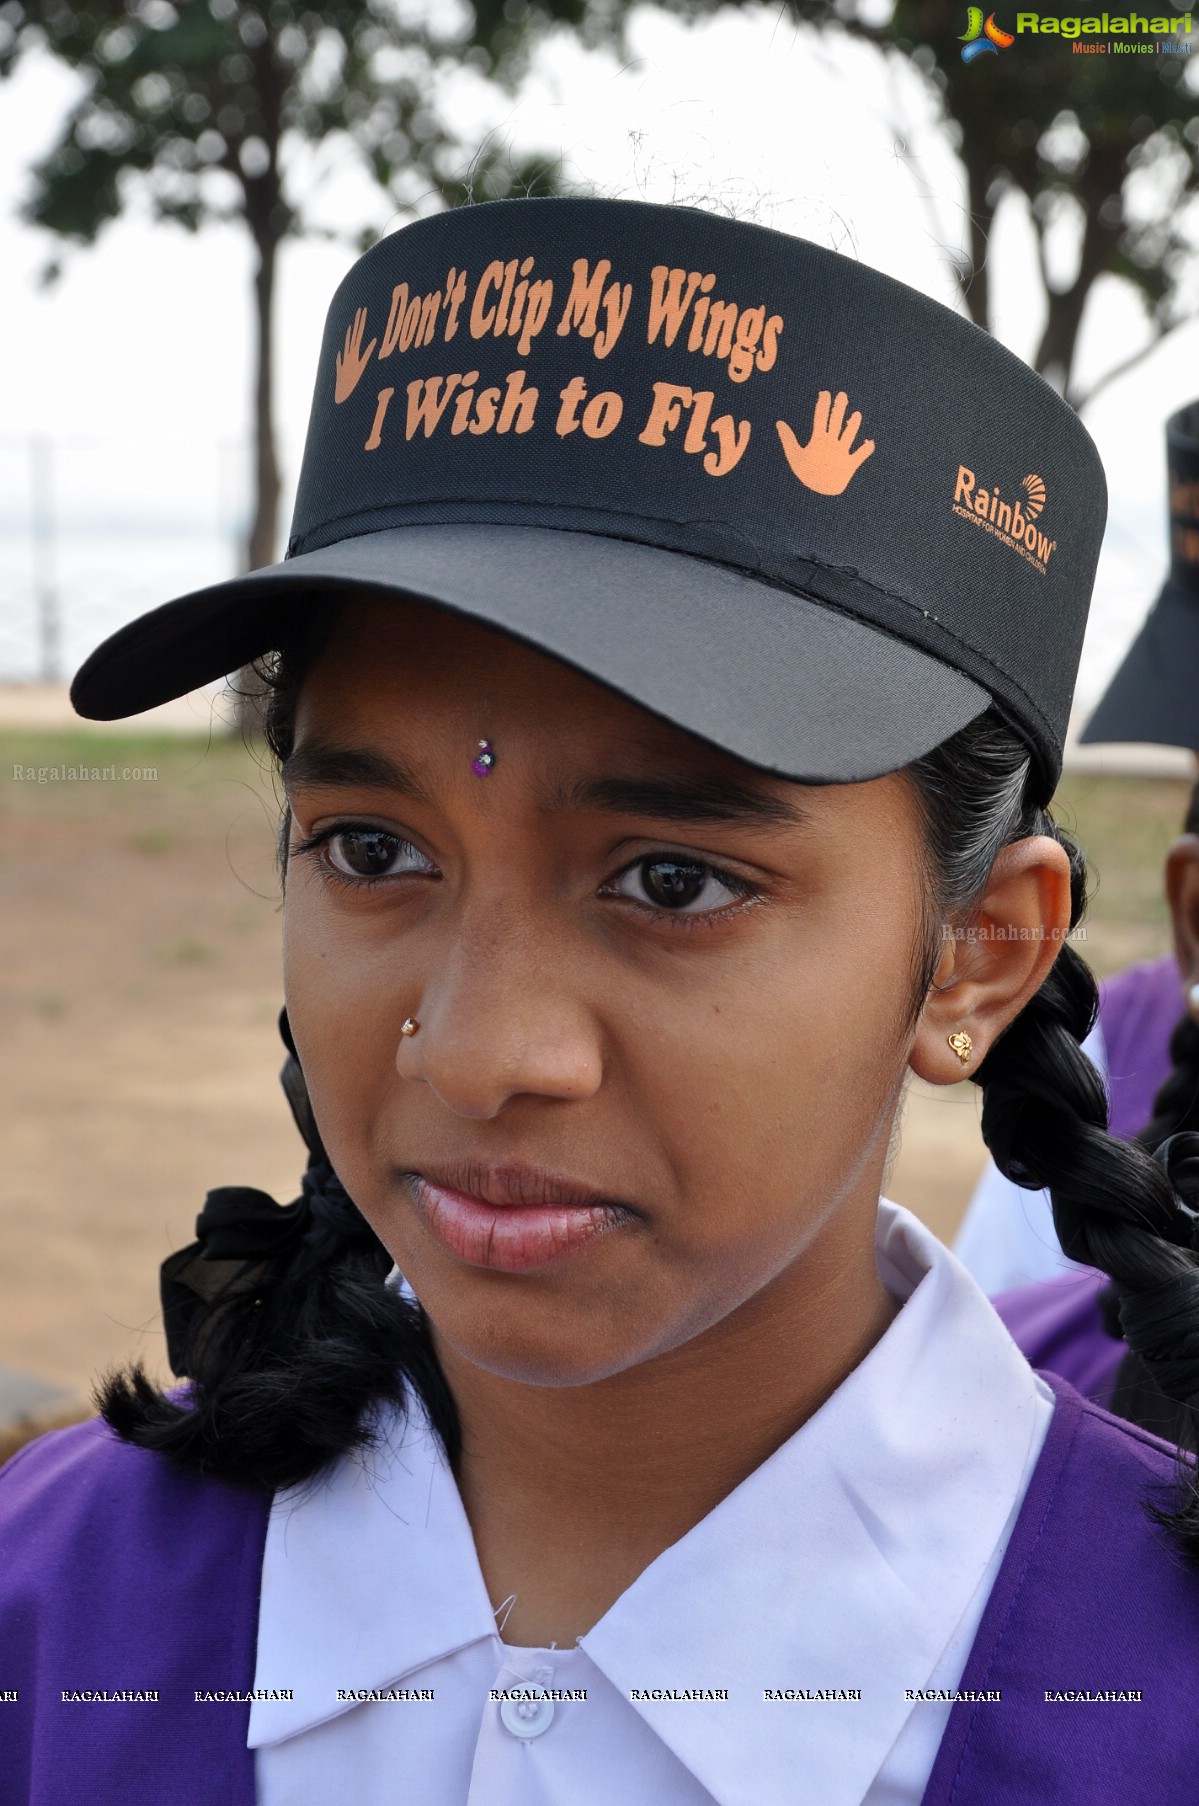 Children CID Telangana - Children Rally and Program Against Child Sex Abuse